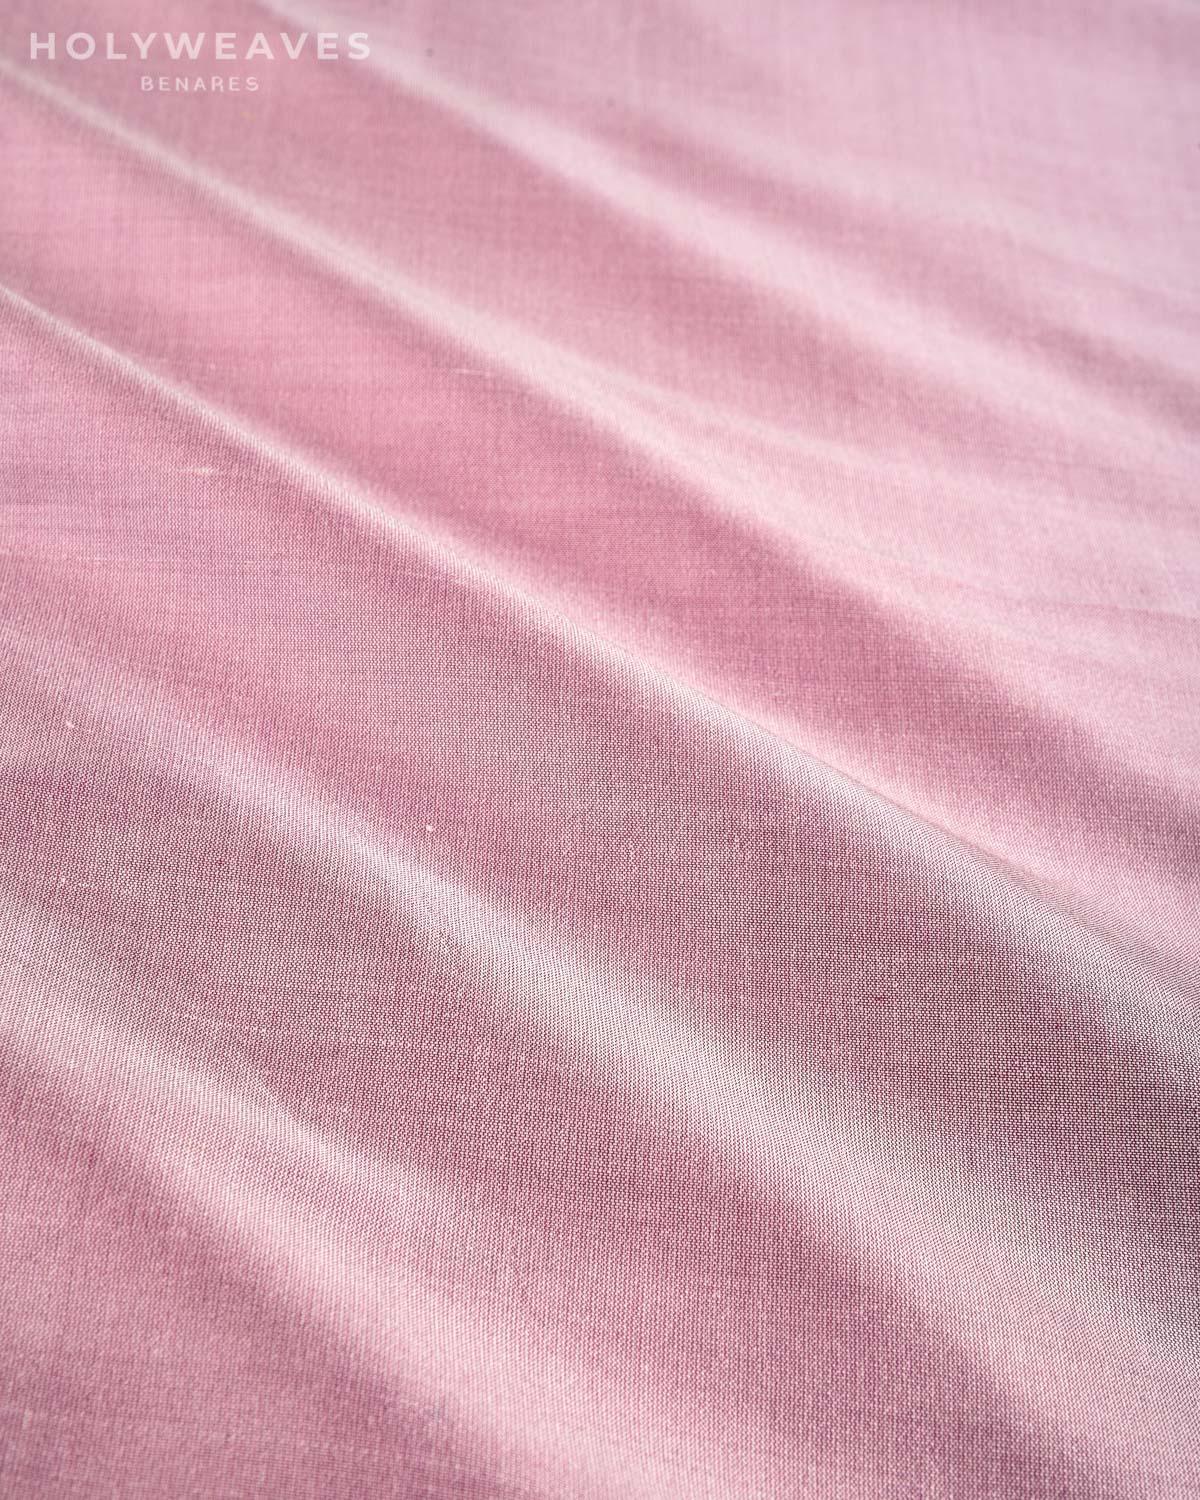 Shot Mauve Banarasi Plain Woven Spun Silk Fabric - By HolyWeaves, Benares